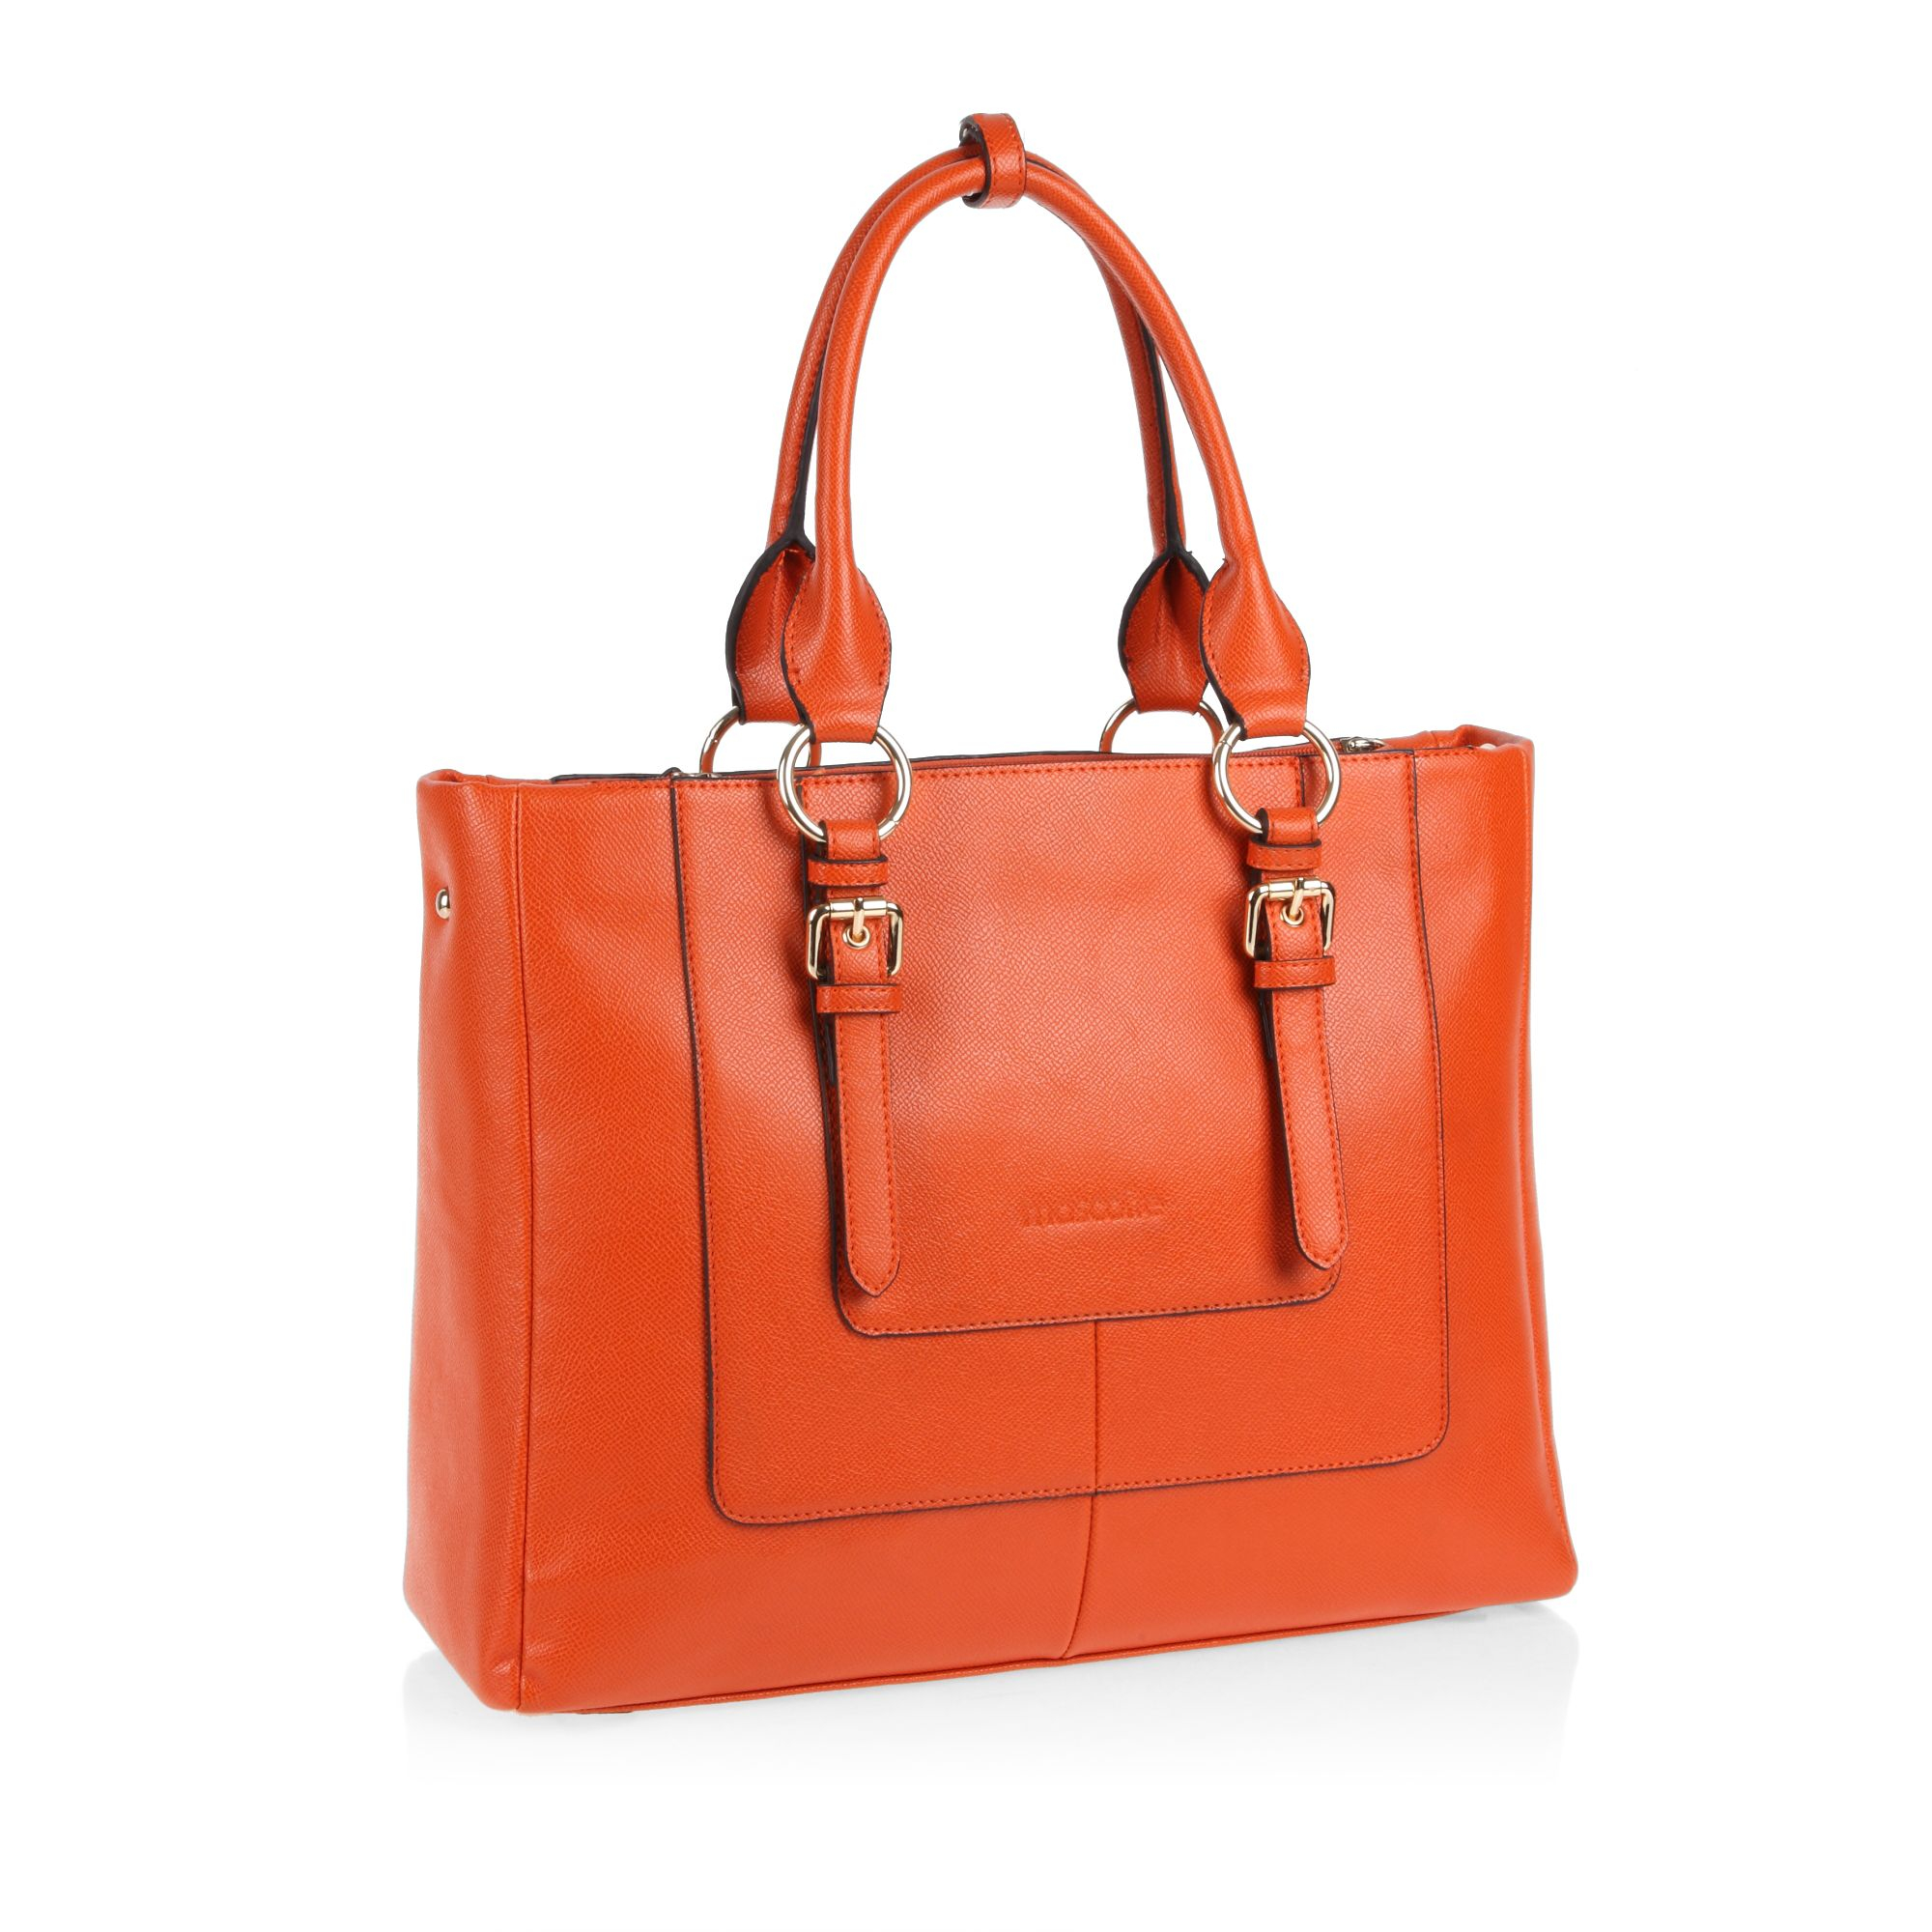 Mascotte Double Handled Hobo Bag in Orange | Lyst